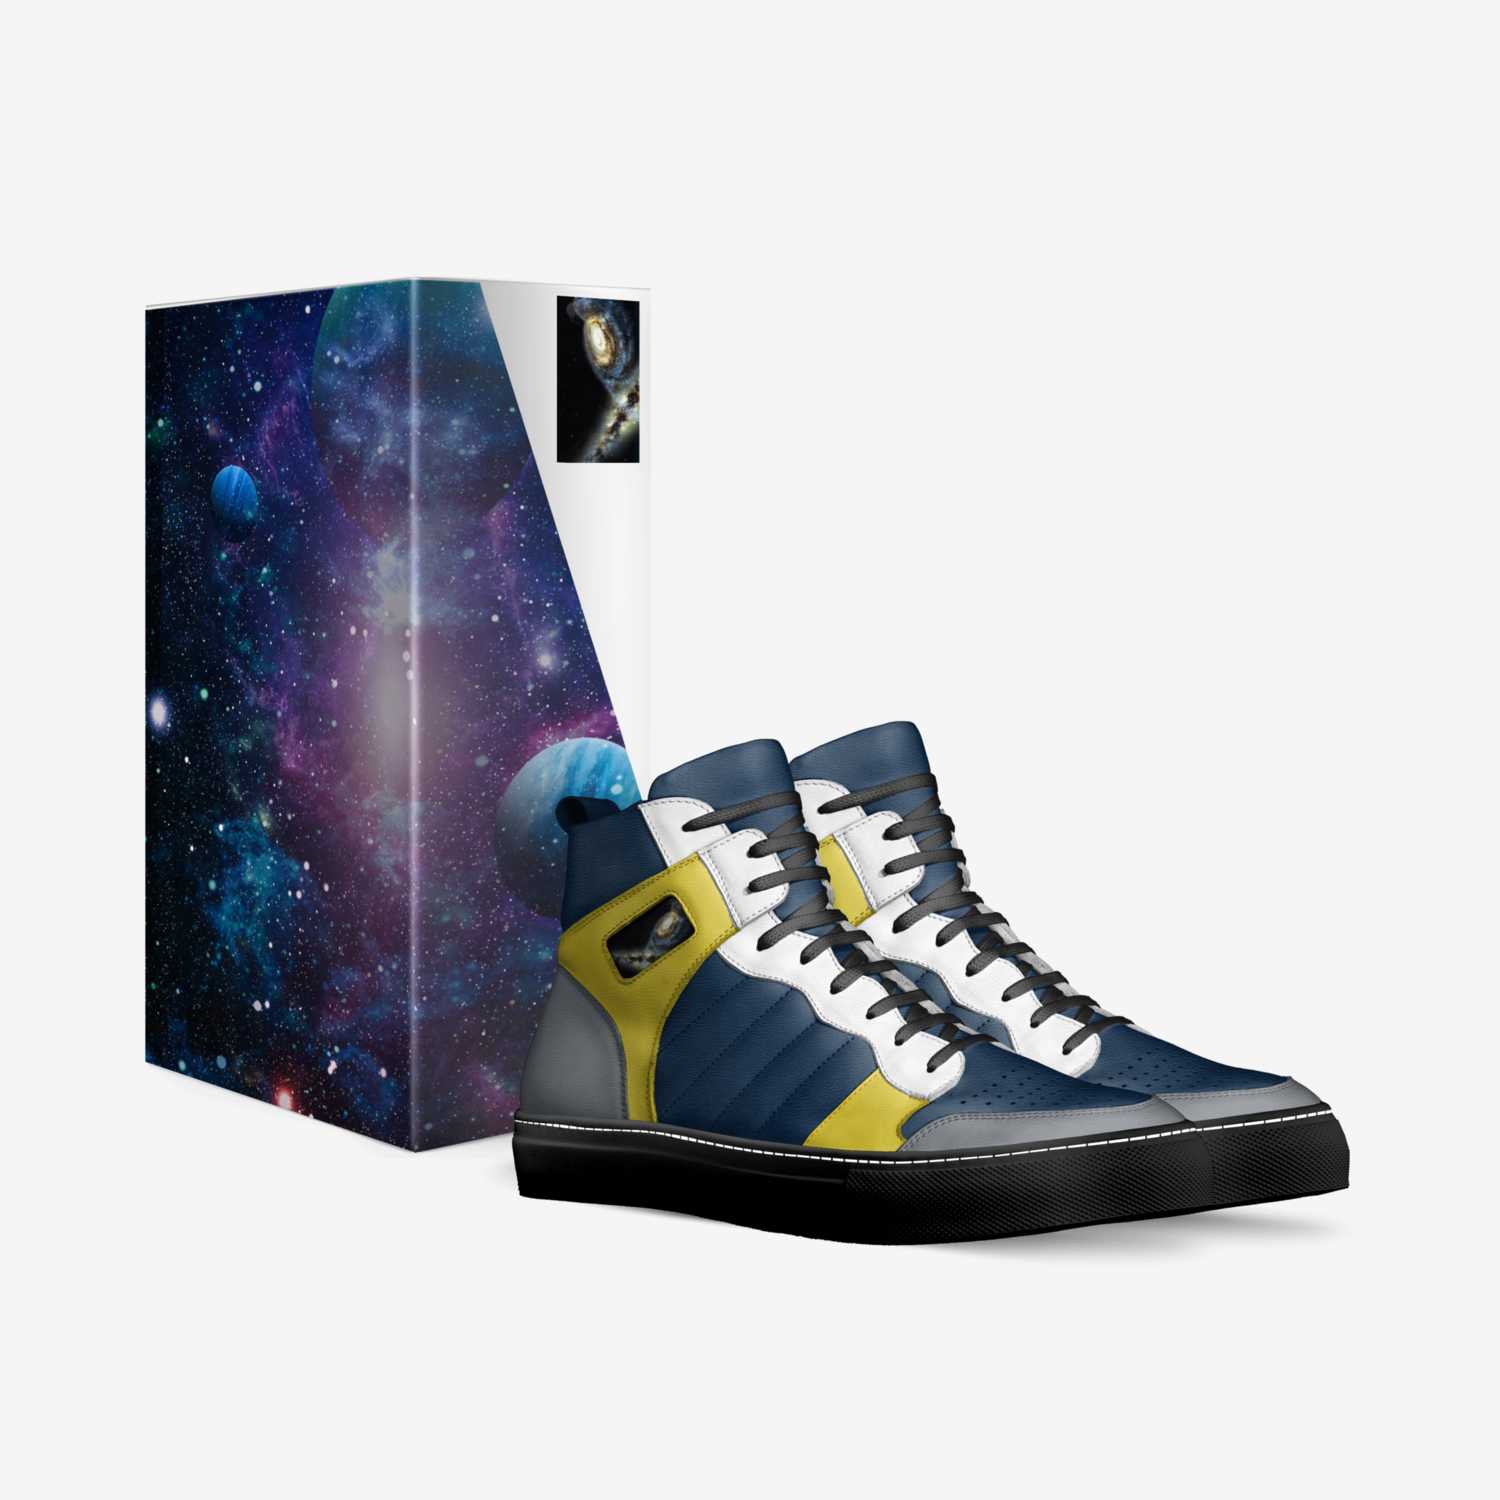 Galaxy custom made in Italy shoes by Rebecca Molera | Box view